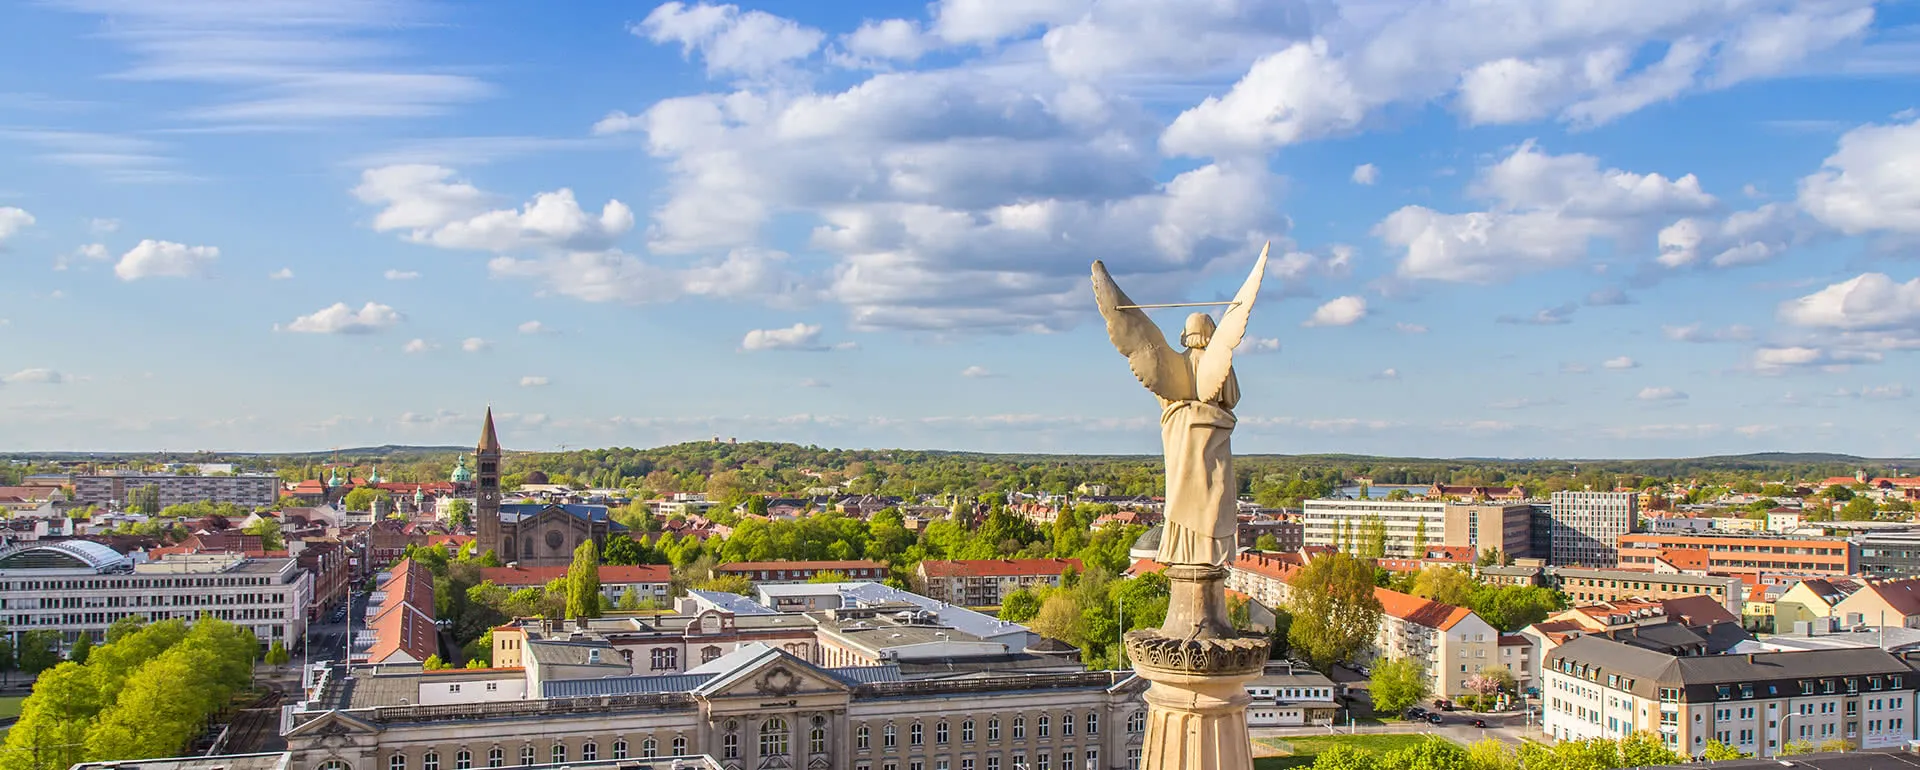 Potsdam - the destination for school trips